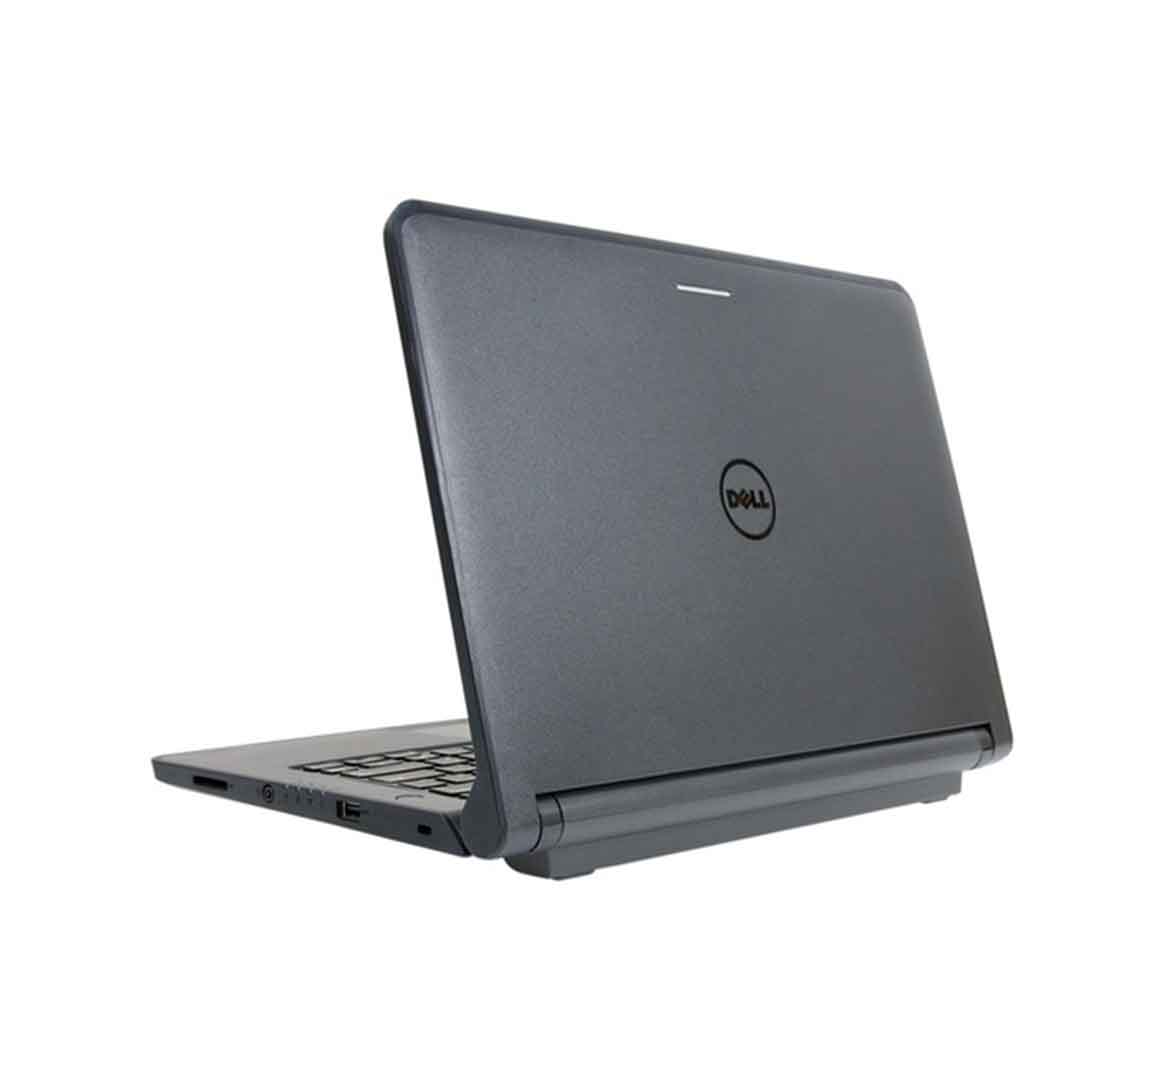 Dell Latitude E3350 Business Laptop, Intel Core i3-5th Gen CPU, 4GB RAM, 500GB HDD, 13 inch Display, Windows 10 Pro